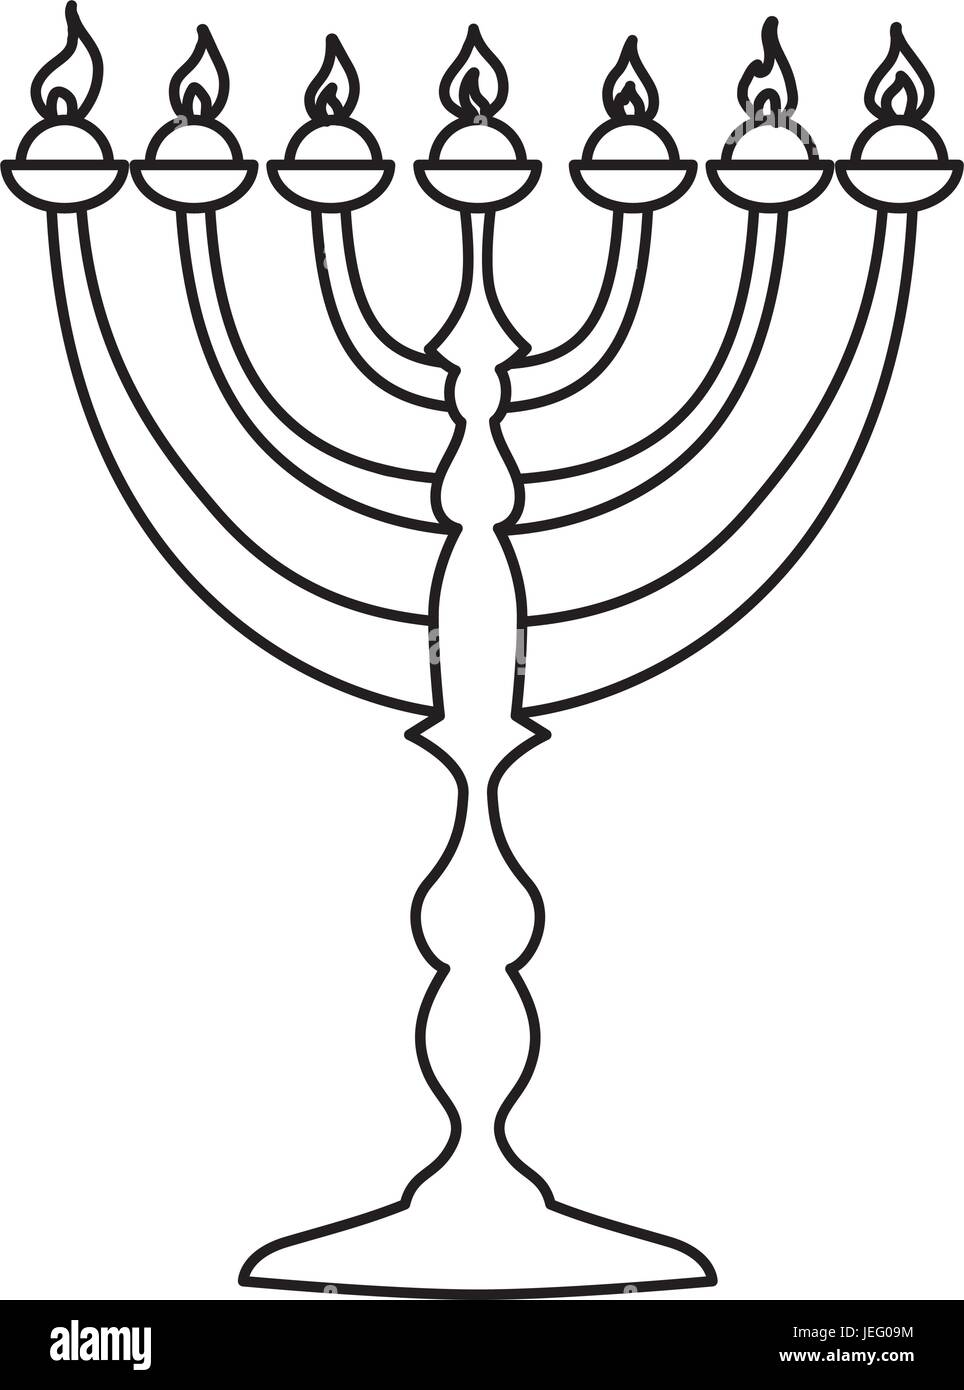 Candelabro judío menorah Imagen Vector de stock - Alamy